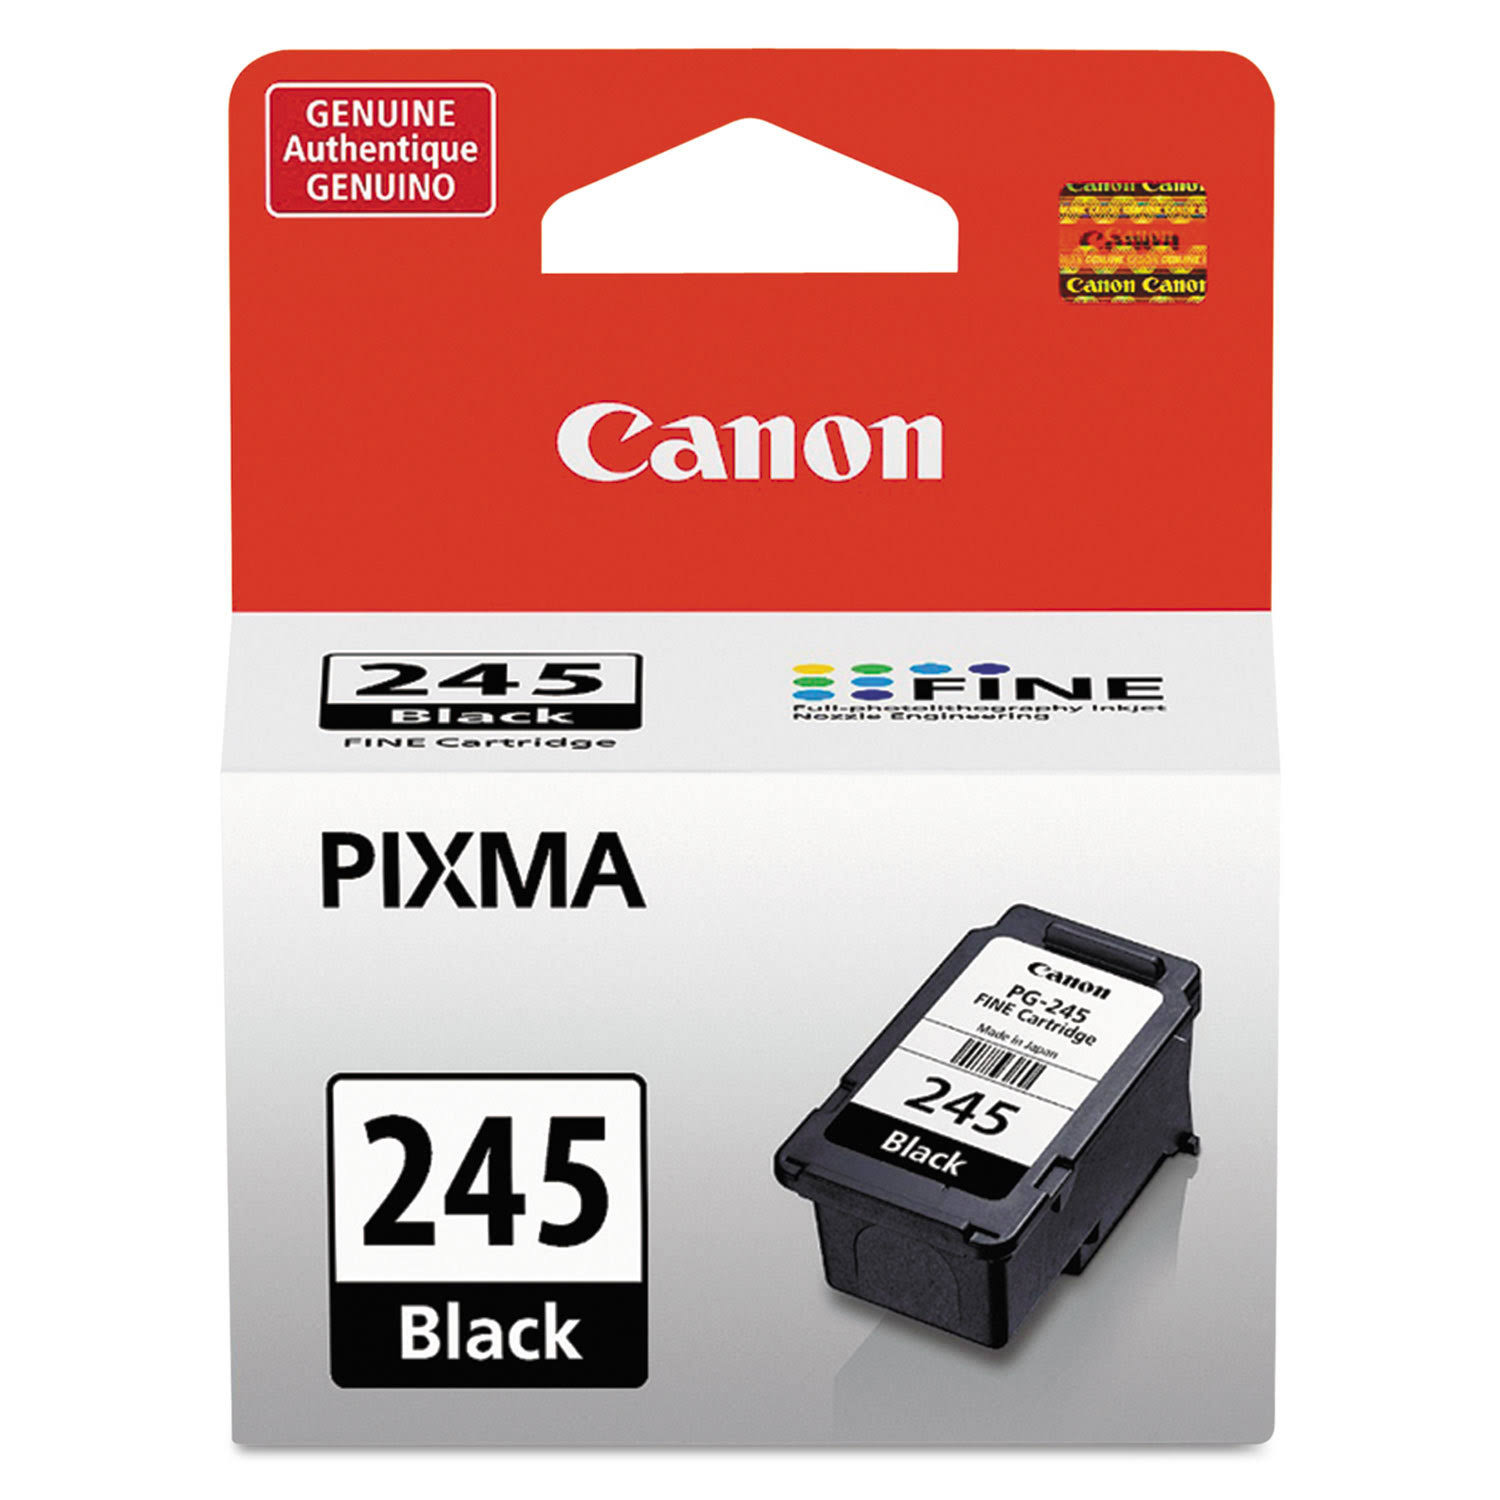 Canon Pixma Ink Cartridge - Black